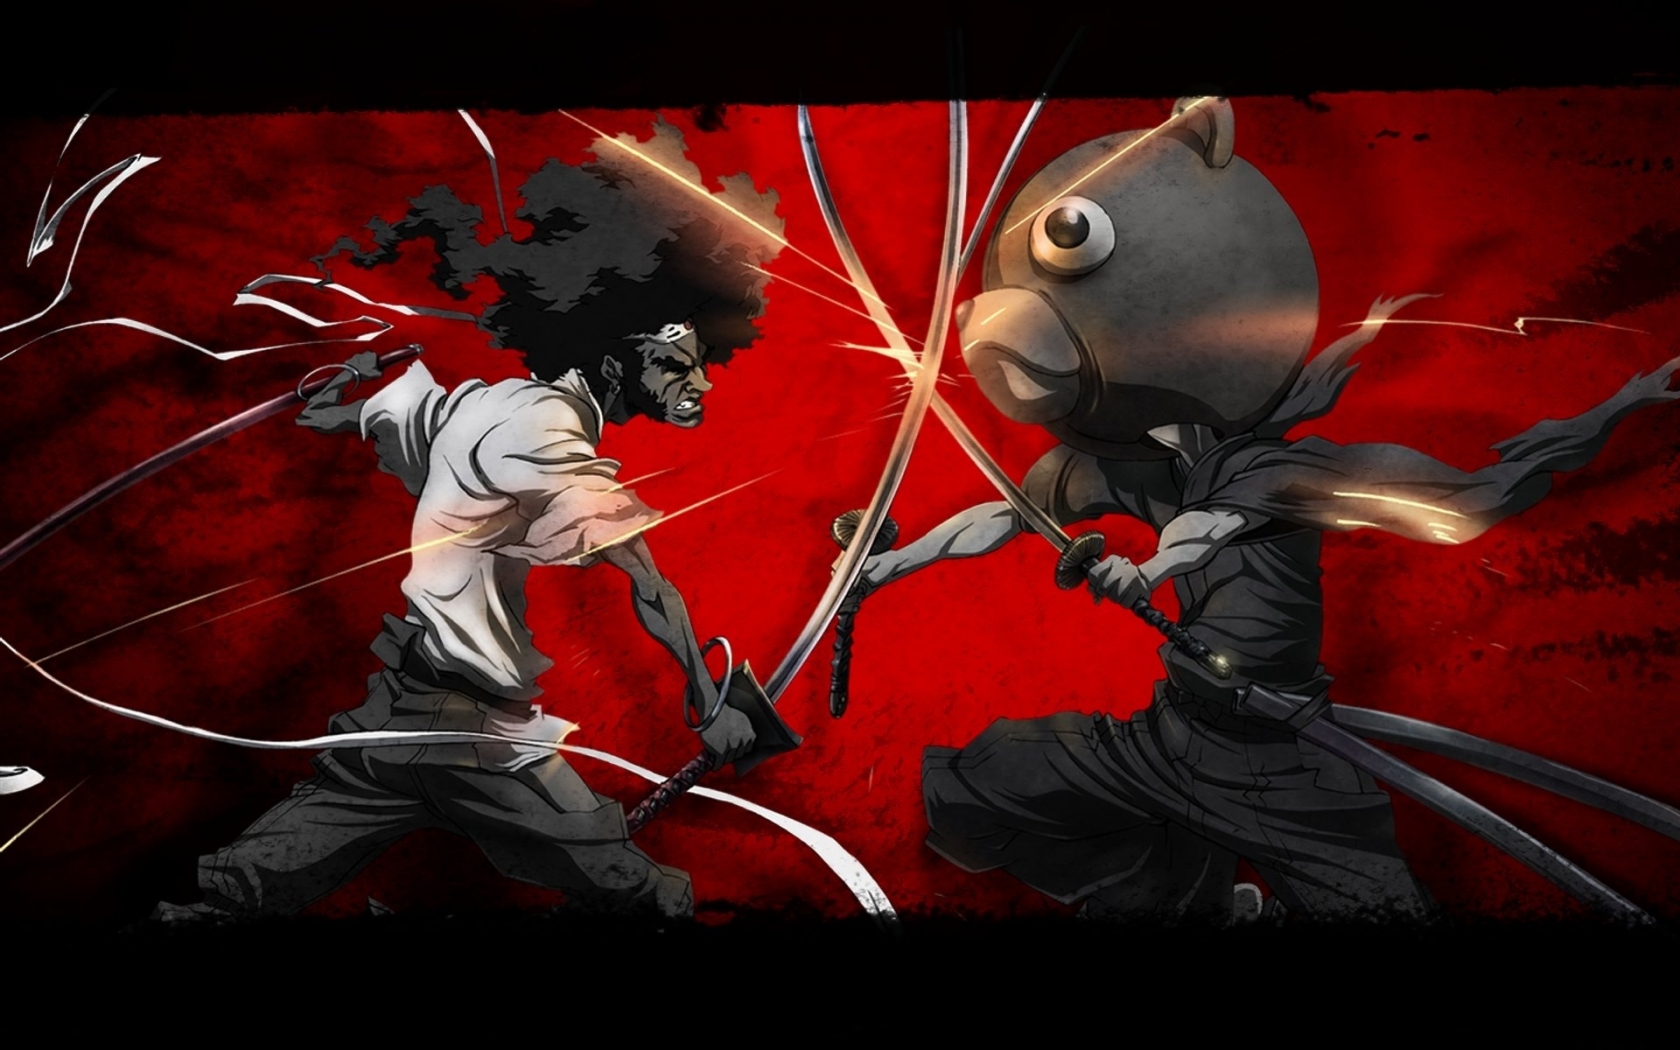 Afro Samurai vs Kuma for 1680 x 1050 widescreen resolution